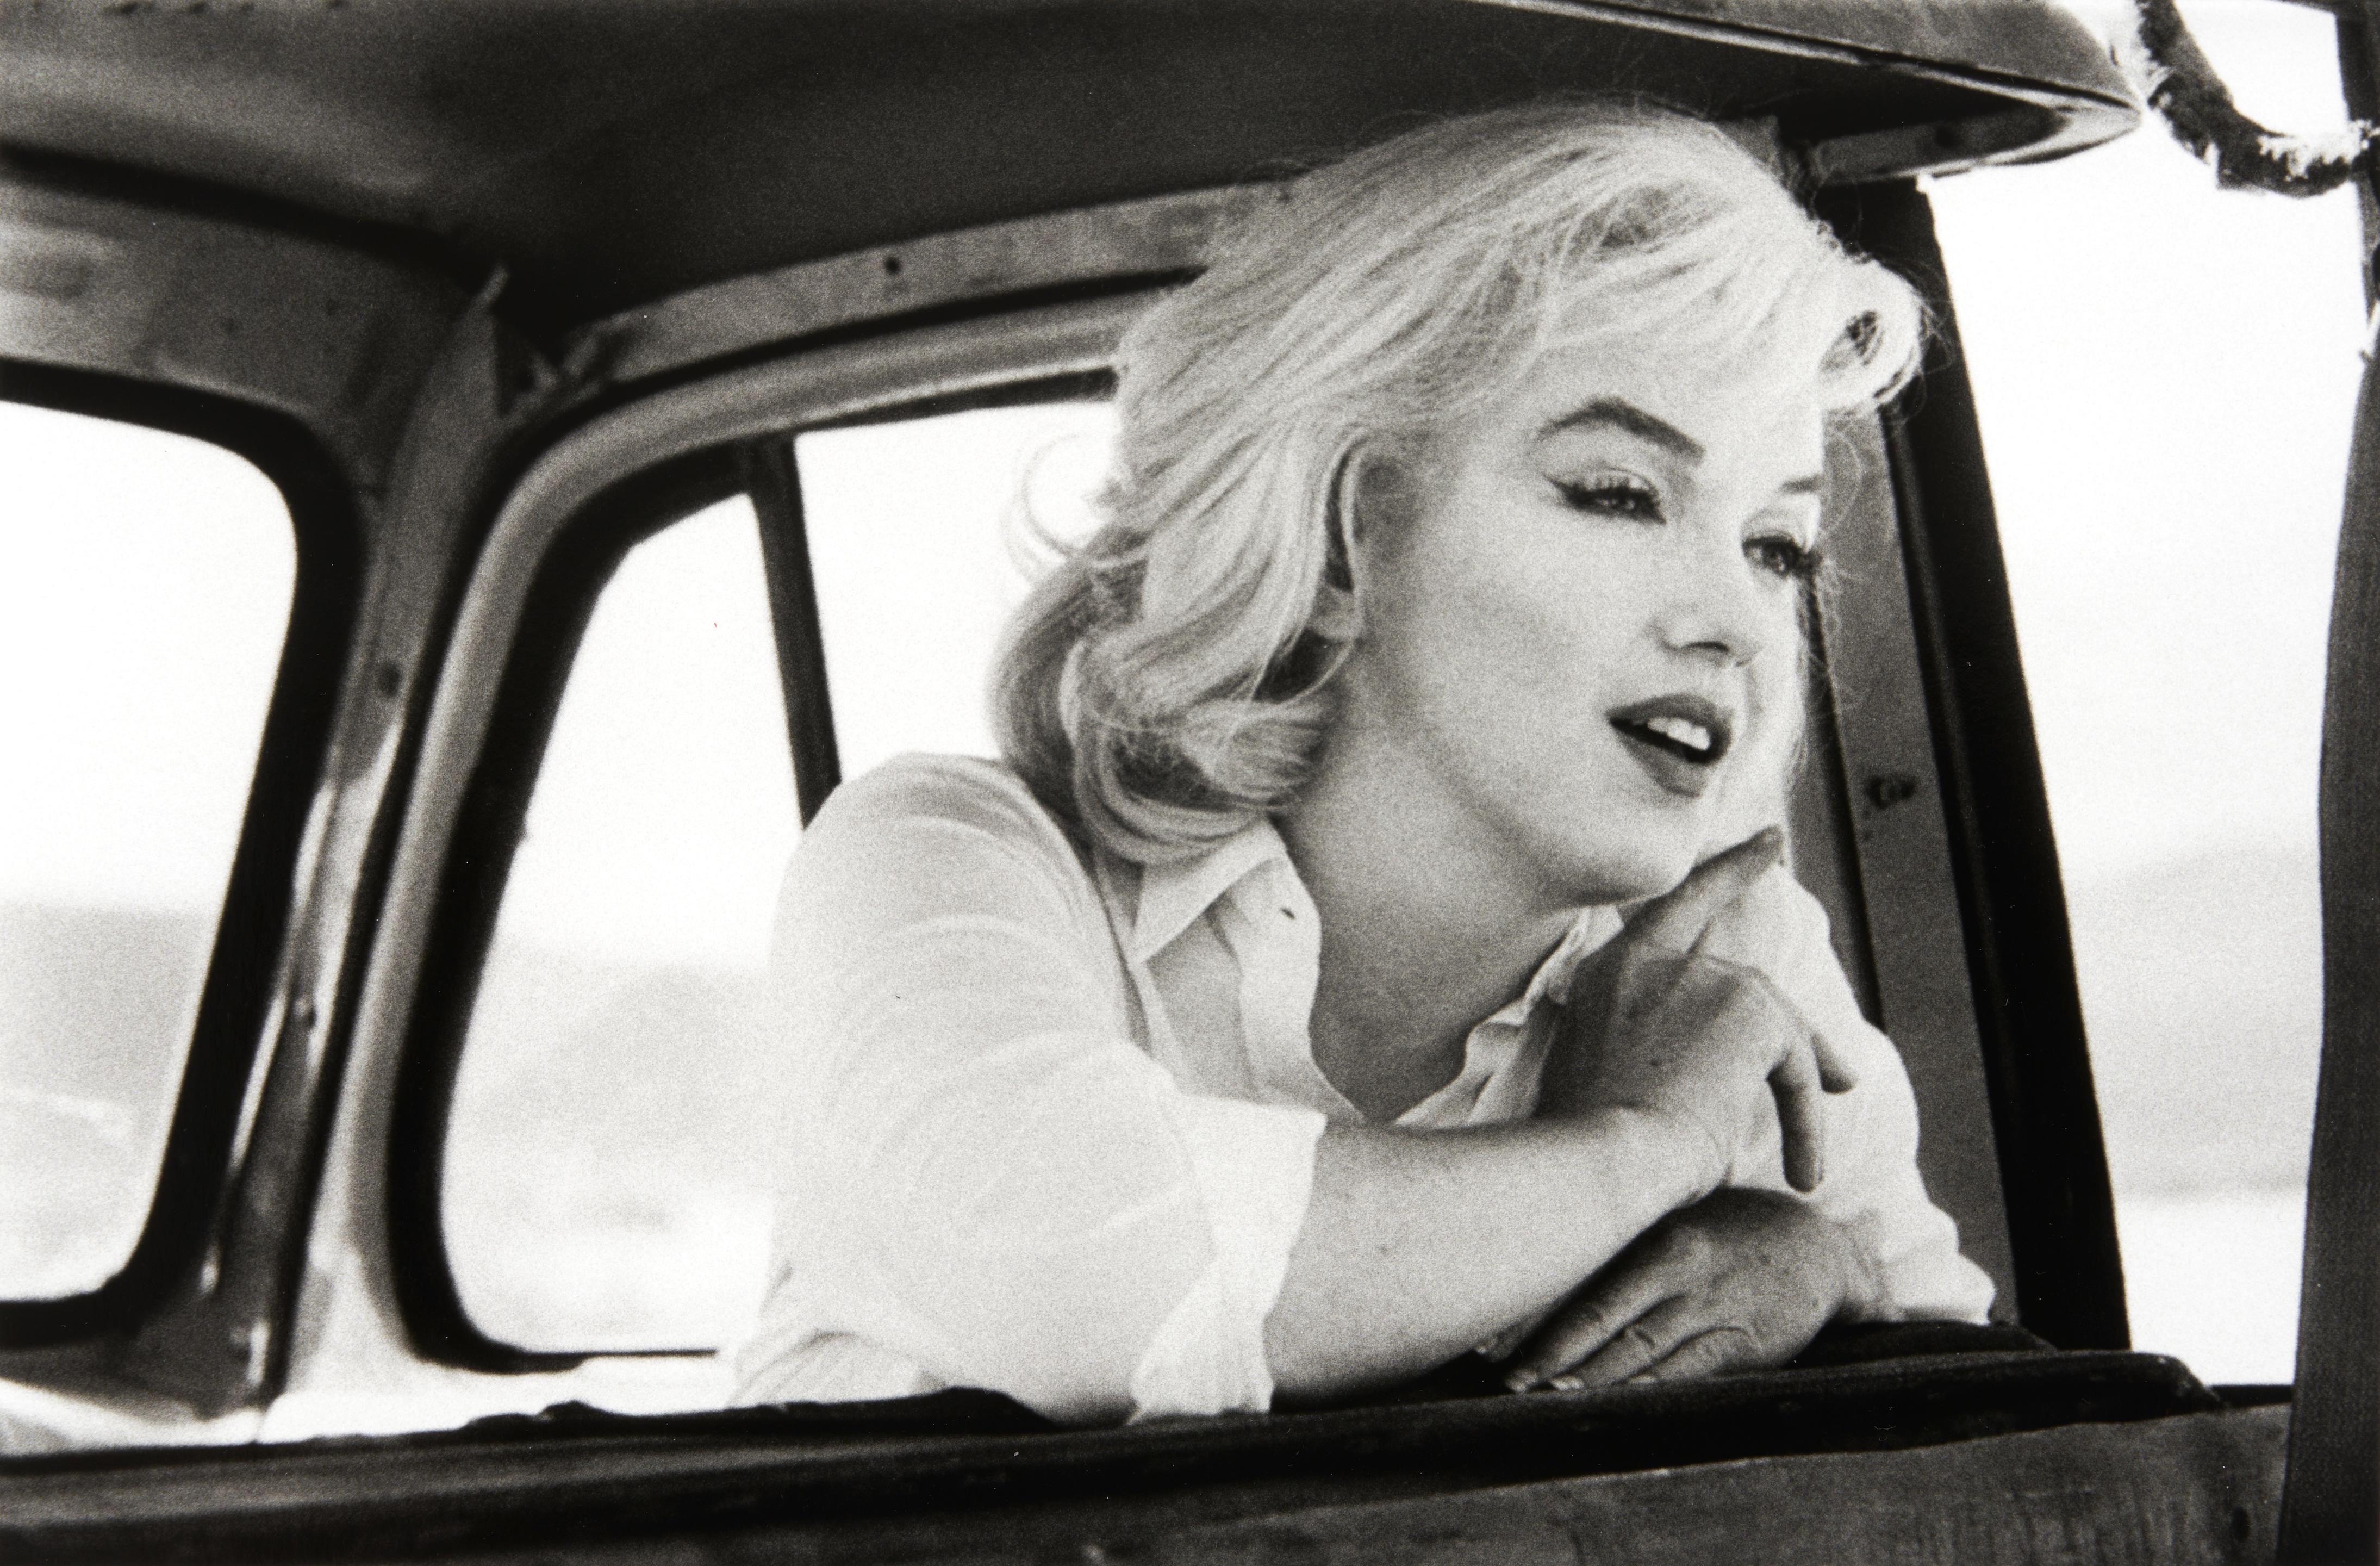 Ernst Haas Portrait Photograph - Marilyn Monroe in the Car Looking Forward